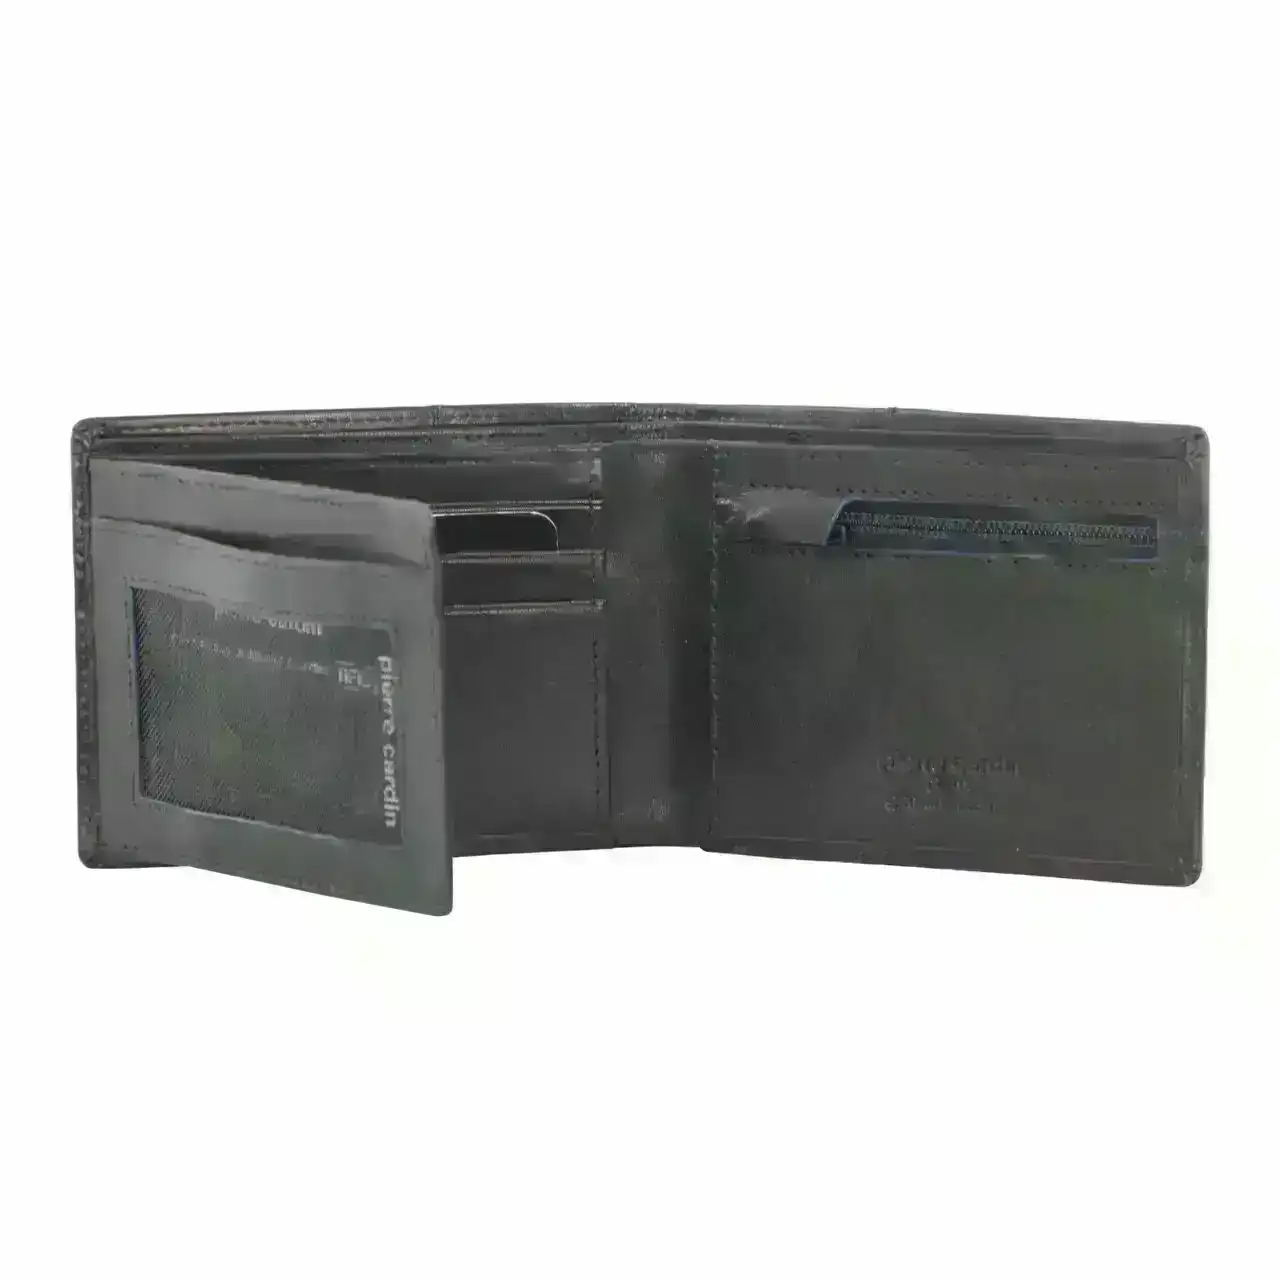 Pierre Cardin Leather Mens Bi-Fold Wallet RFID Protection Travel Bi-Fold - Black